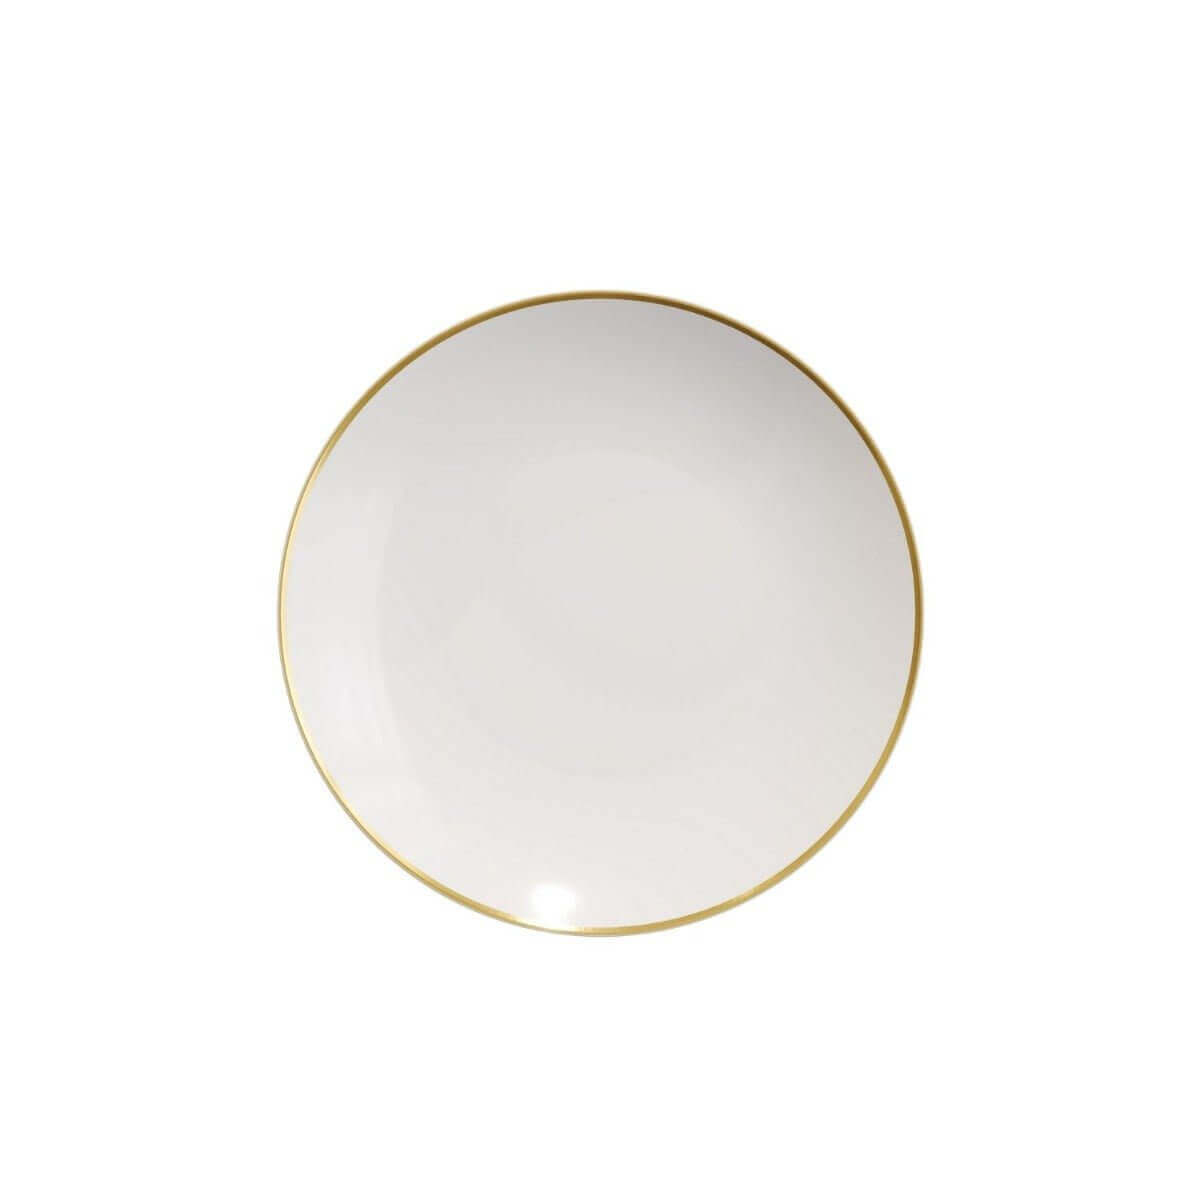 6" Classic Gold Design Plastic Plates (40 Count) - Yom Tov Settings